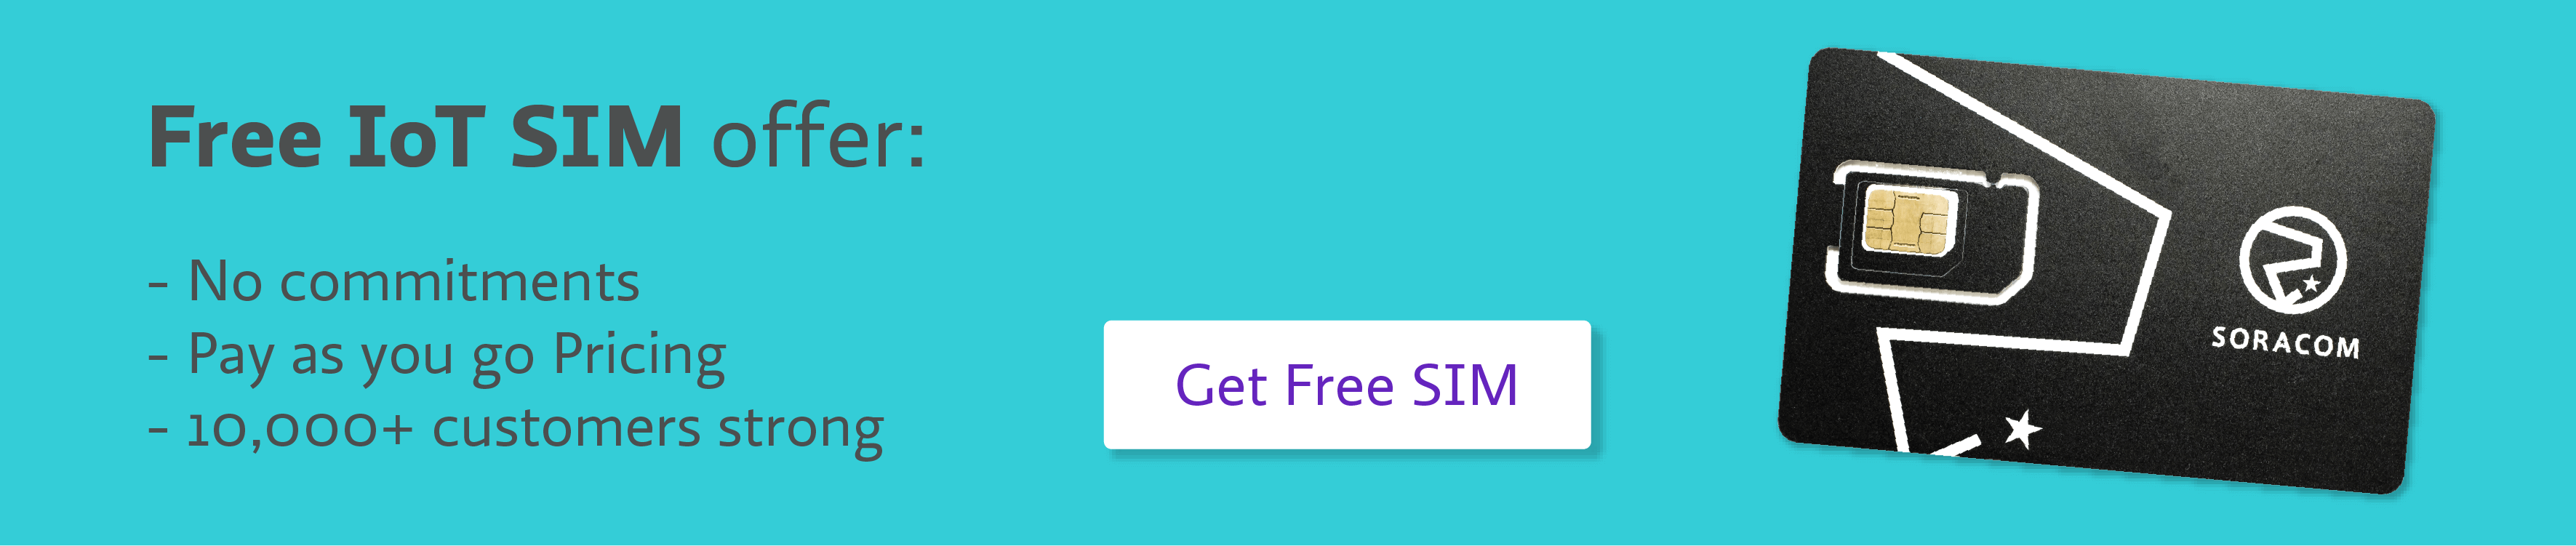 Free SIM offer